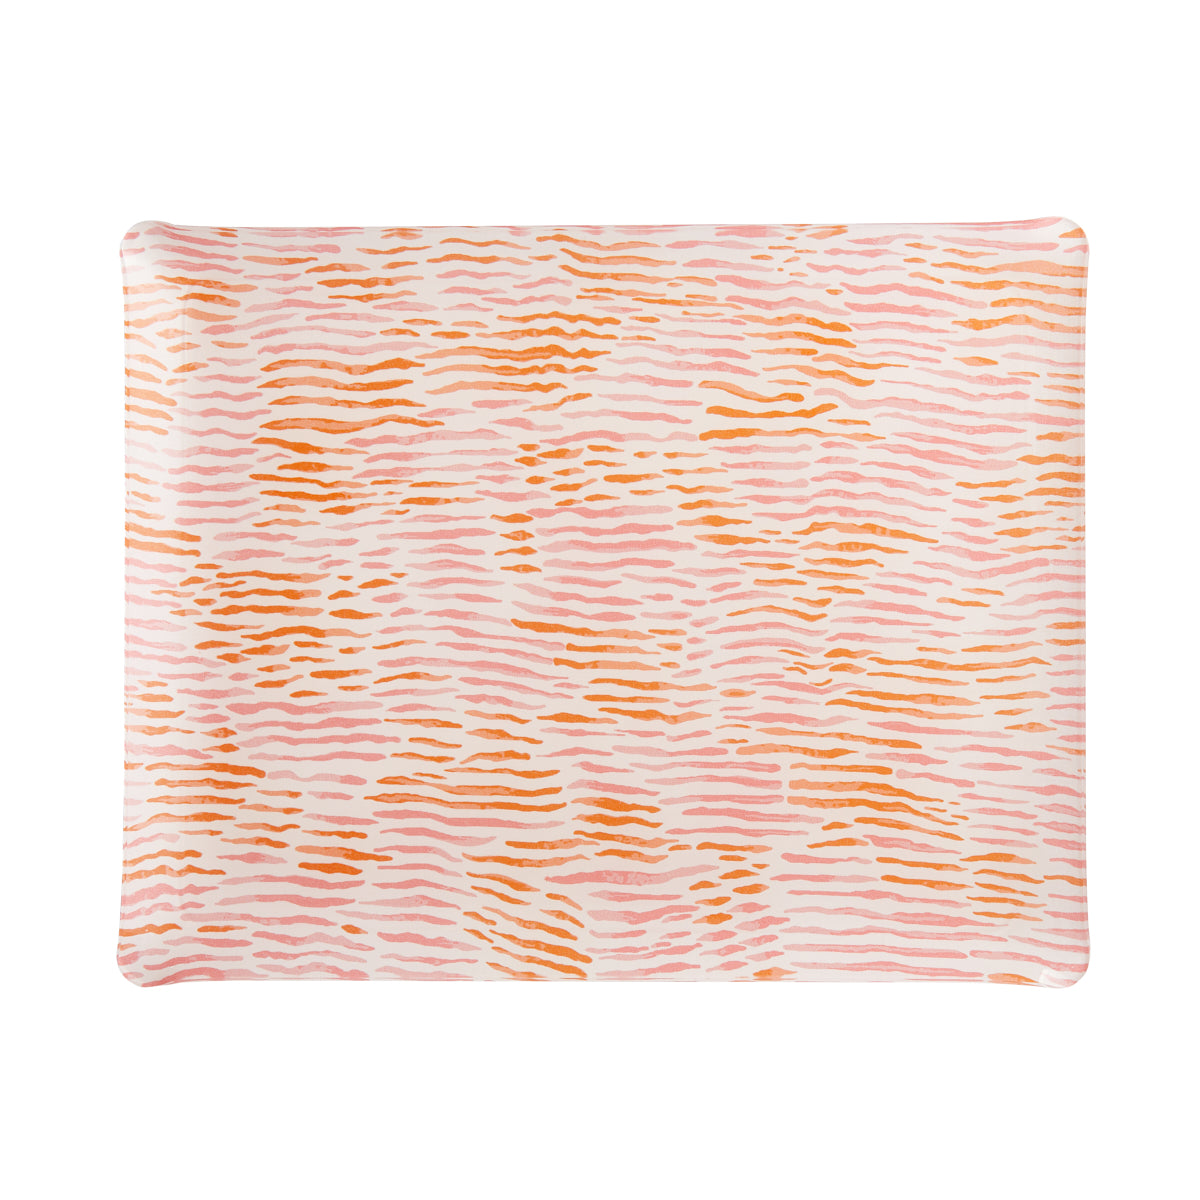 Nina Campbell Fabric Tray Large - Arles Pink/Orange